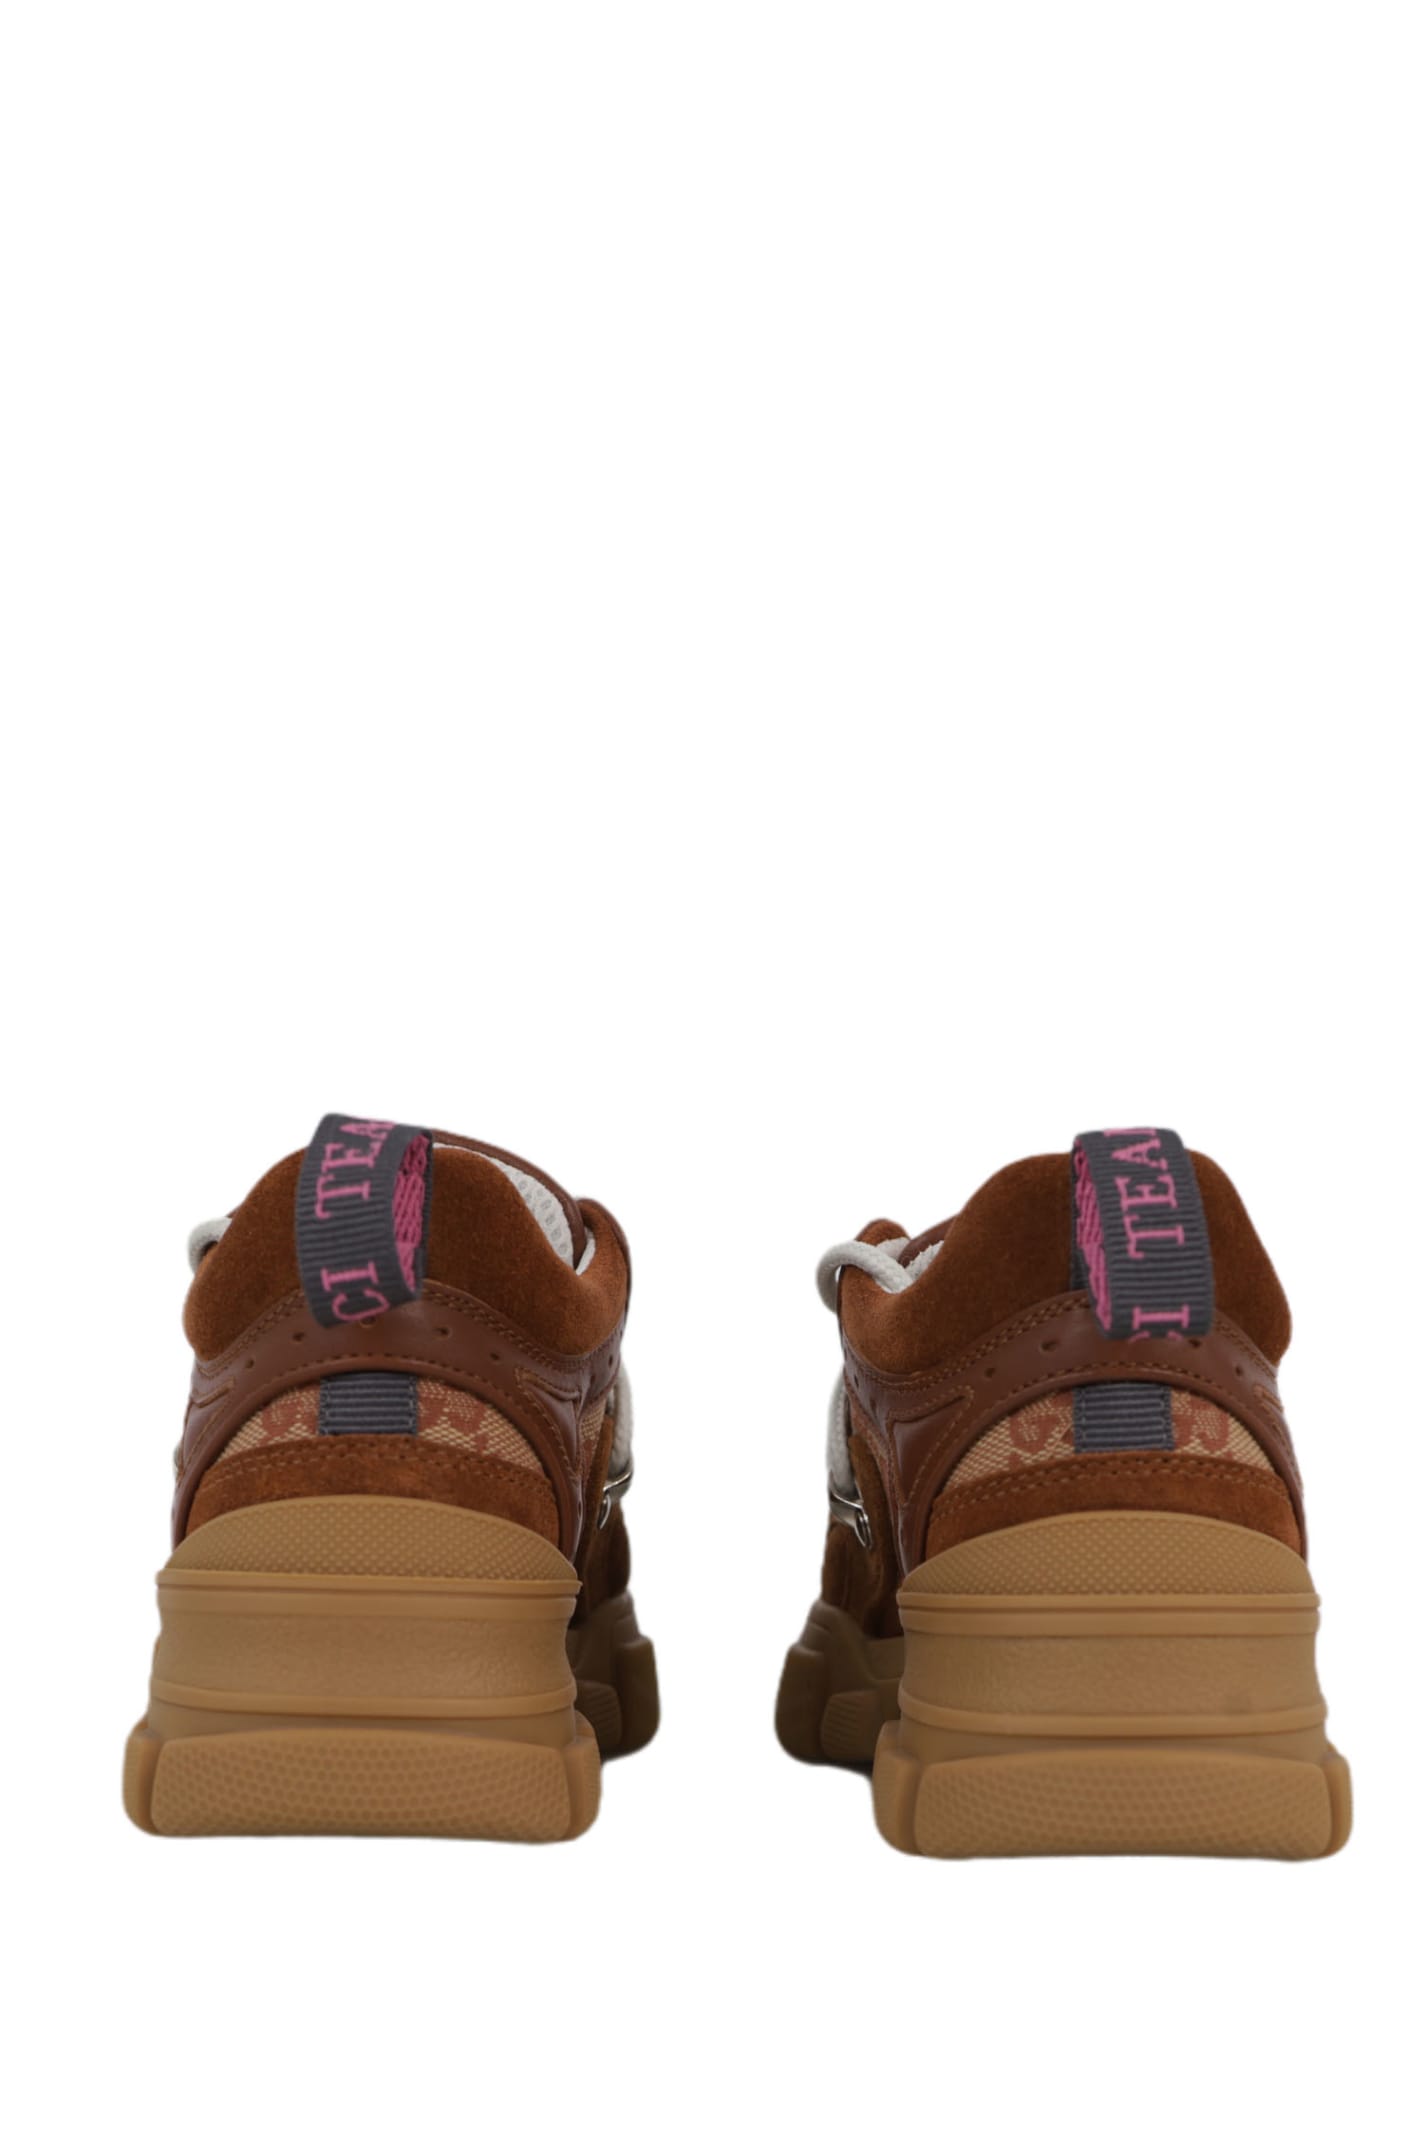 Shop Gucci Flashtrek Sneakers In Brown